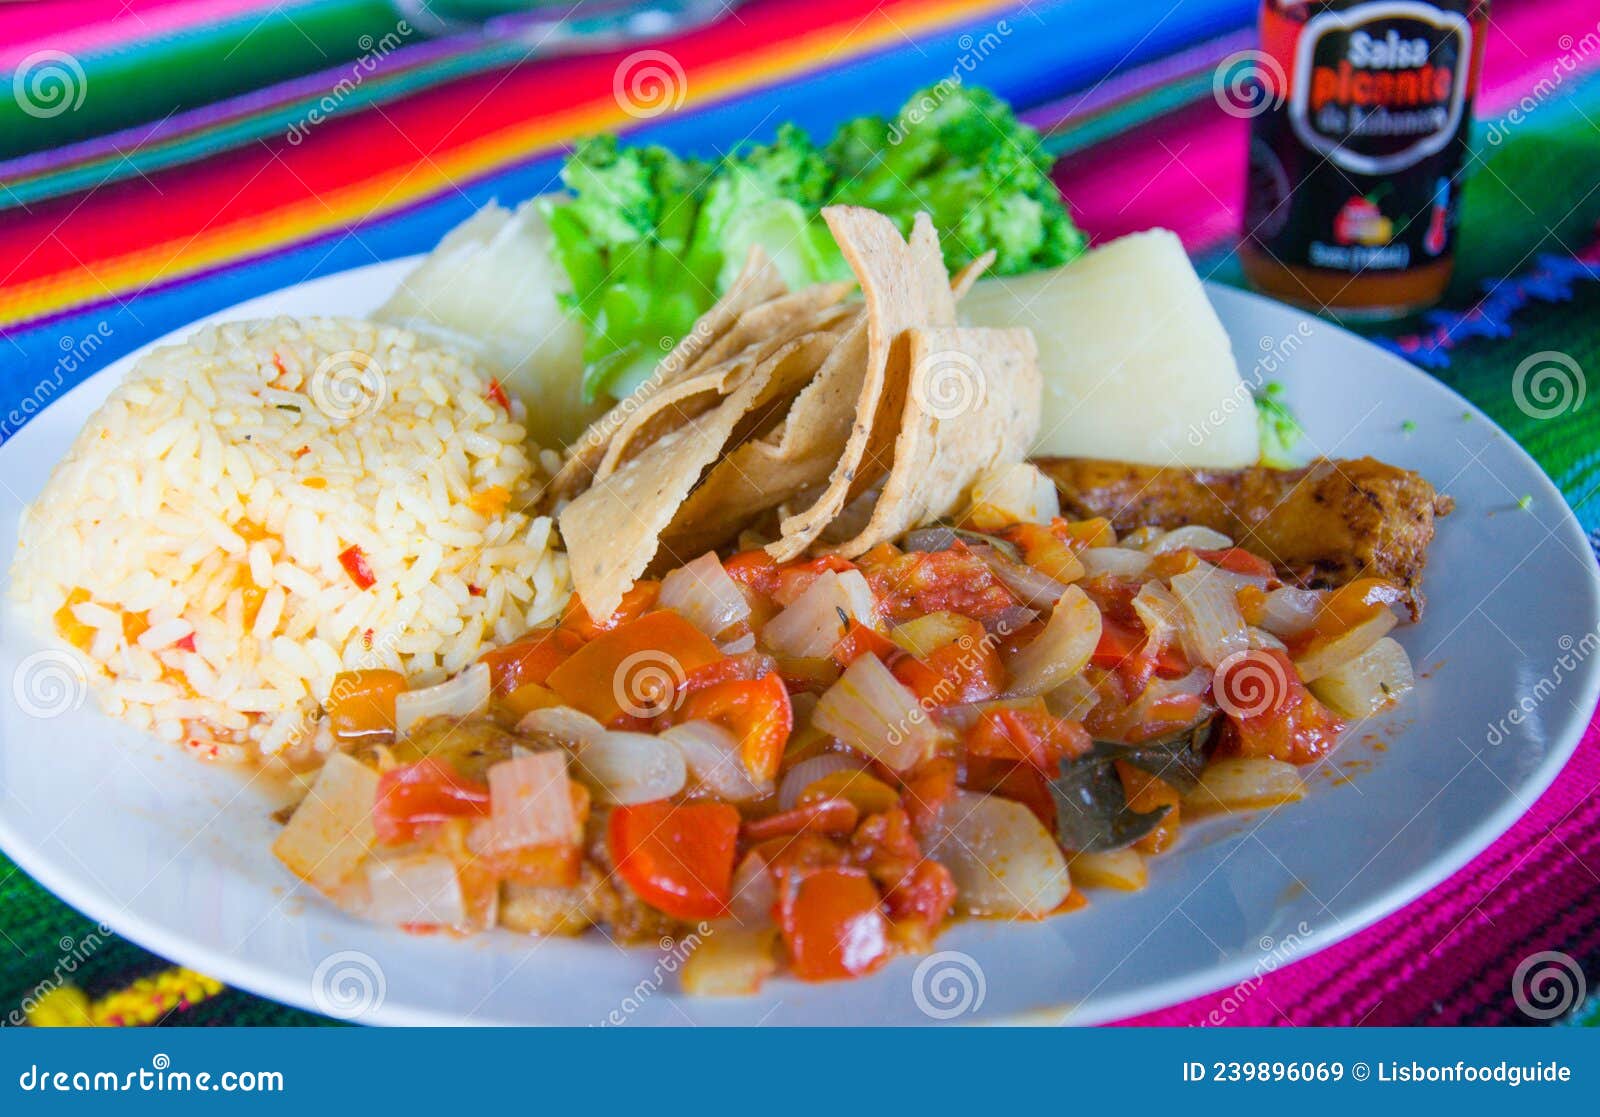 traditional lunch in guatemala, guatemalan food